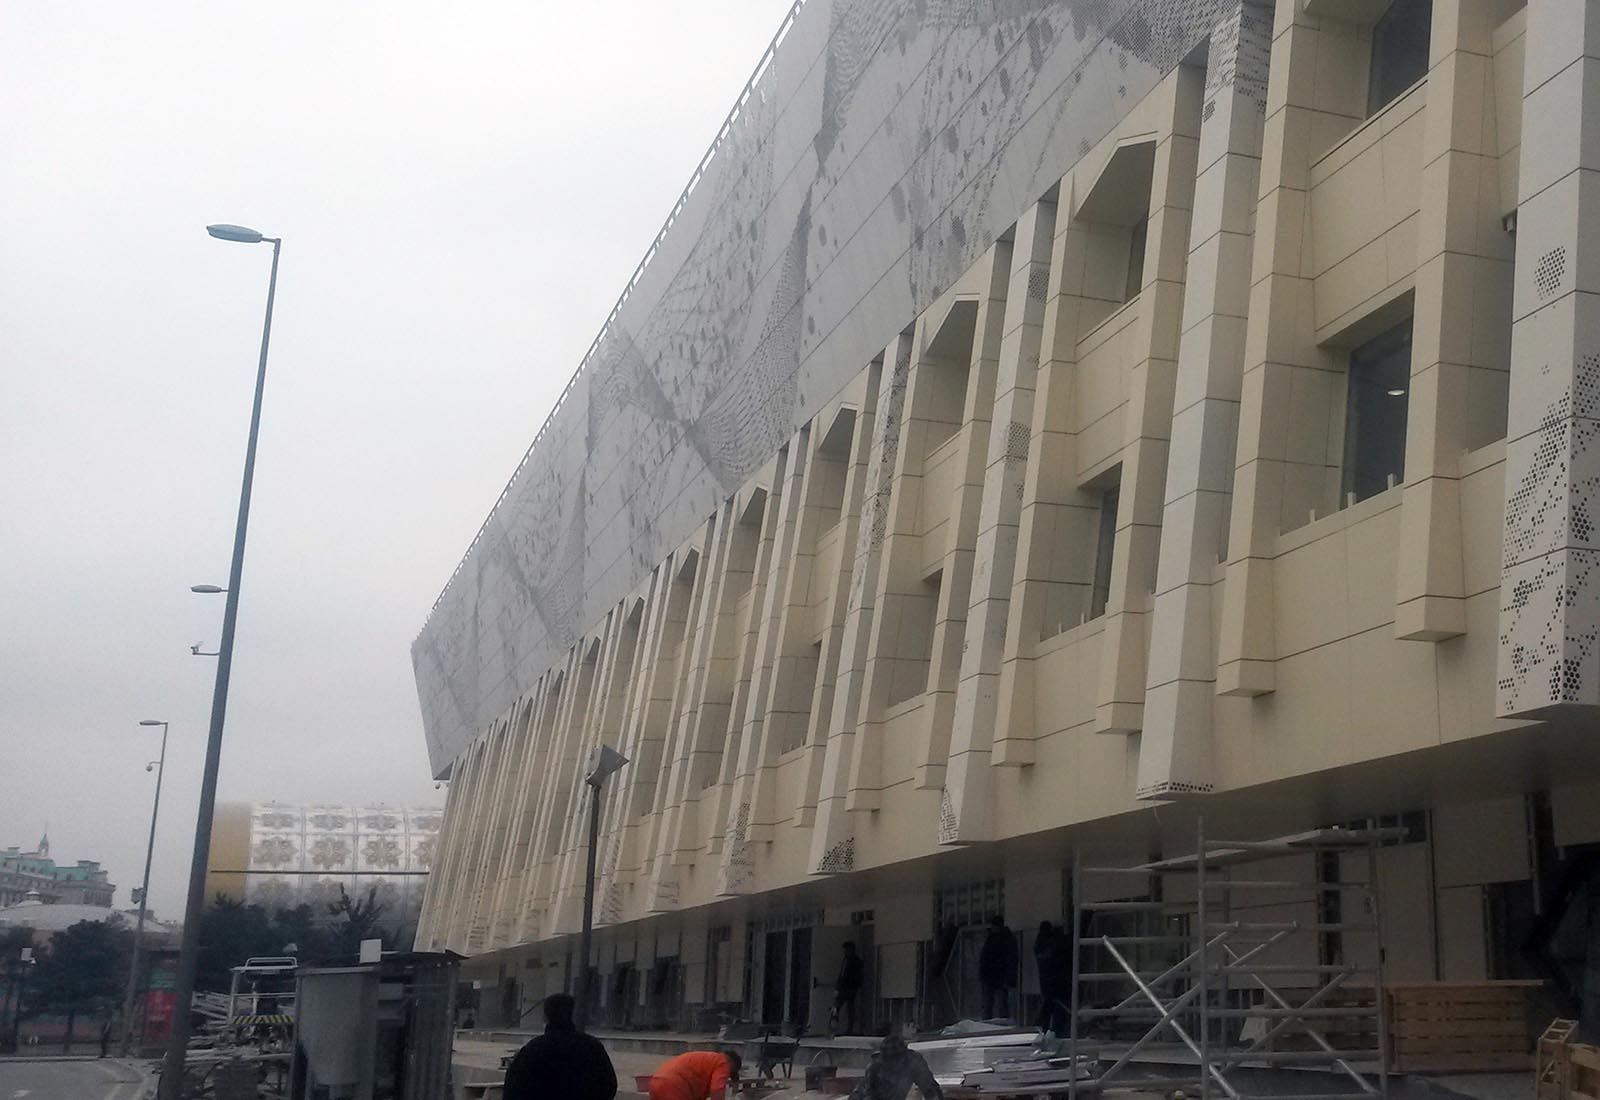  Baku sport hall - Dettaglio del fronte ovest